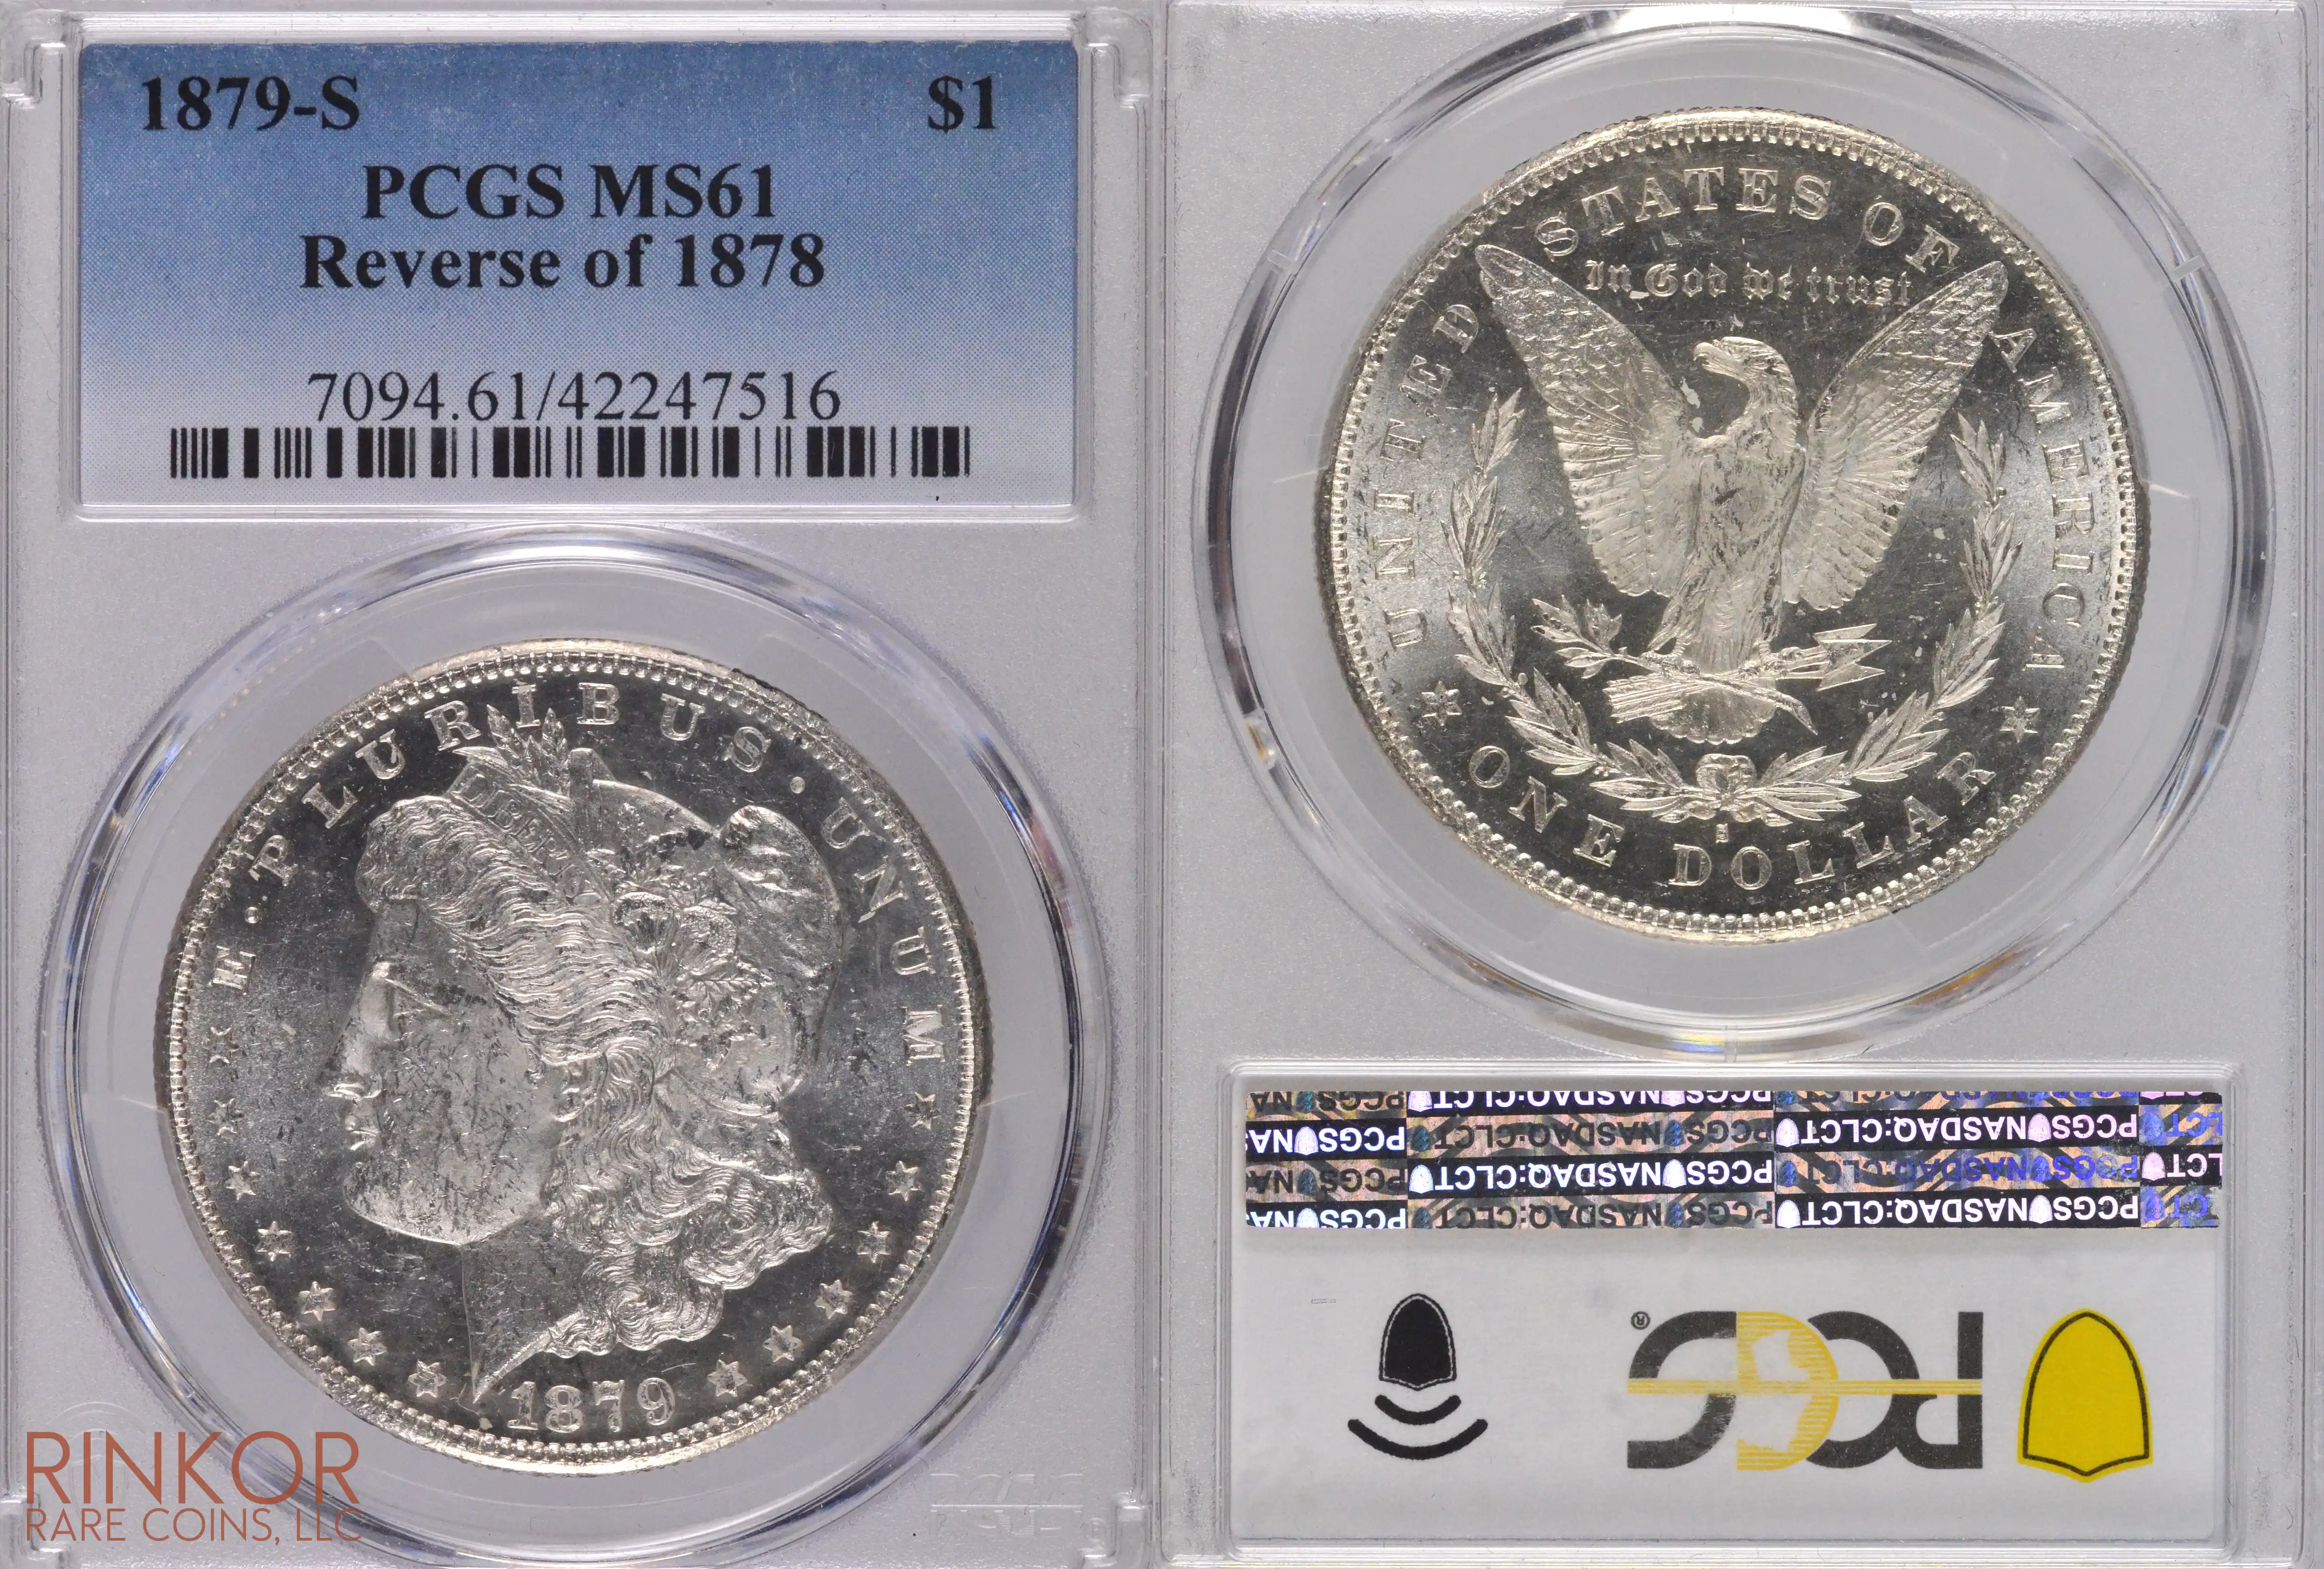 1879-S $1 Reverse of 1878 PCGS MS 61